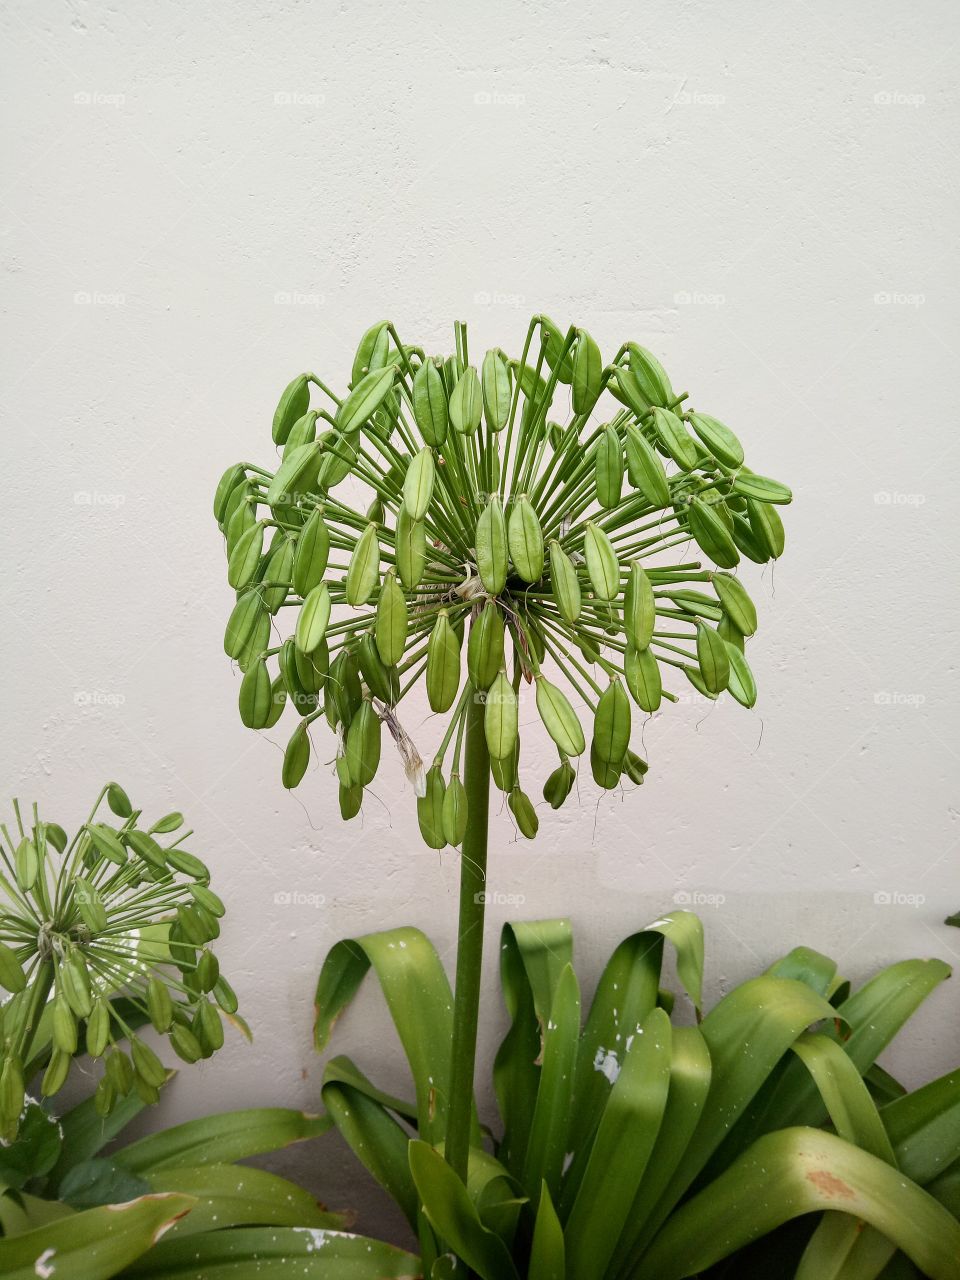 Green flowers